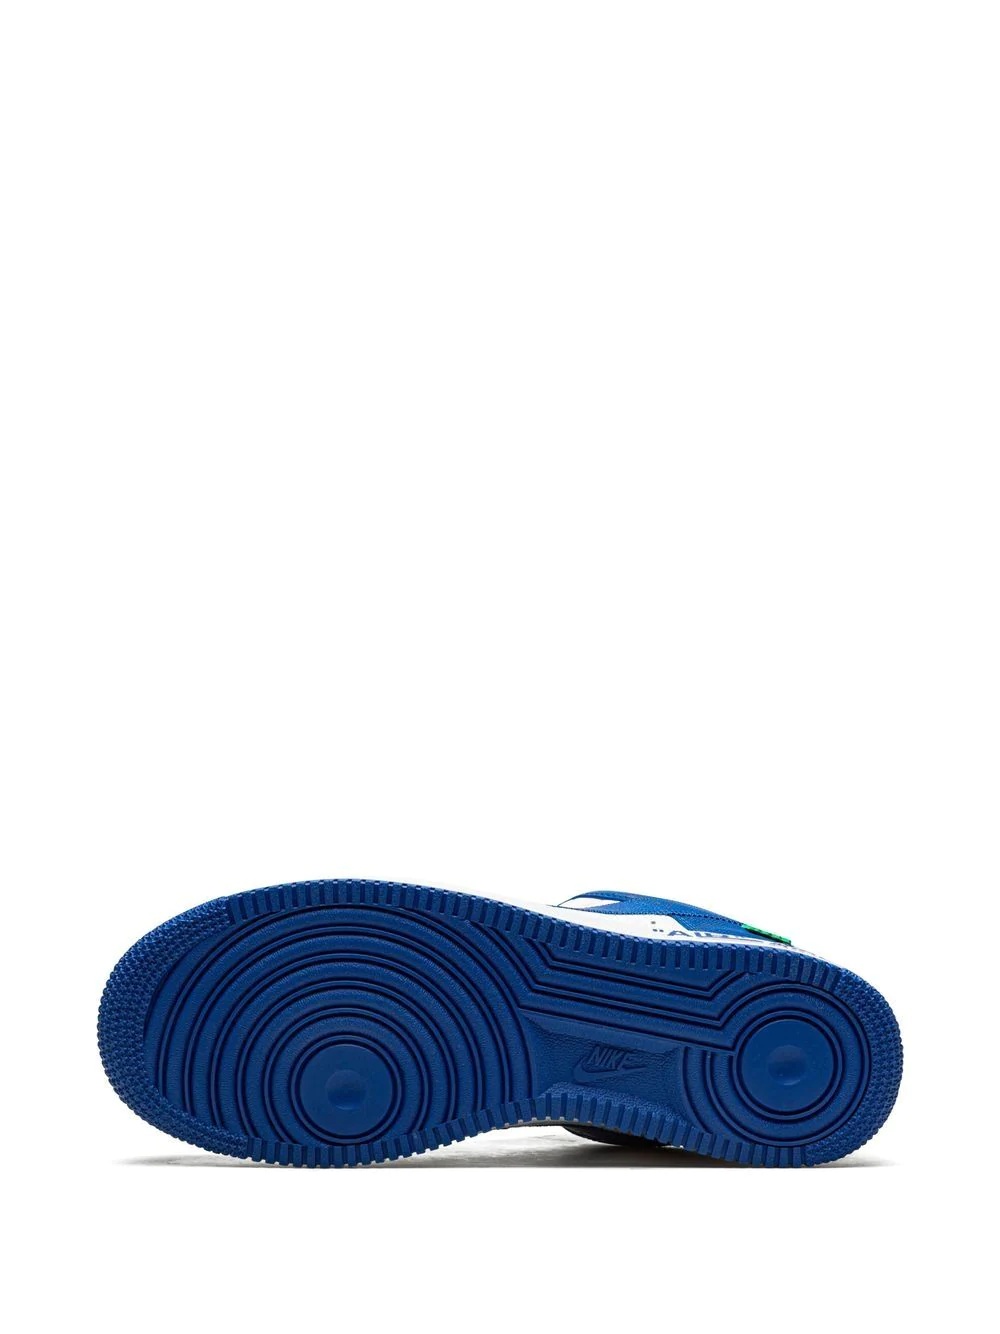 x Louis Vuitton Air Force 1 Low "Virgil Abloh - White/Blue" sneakers - 4